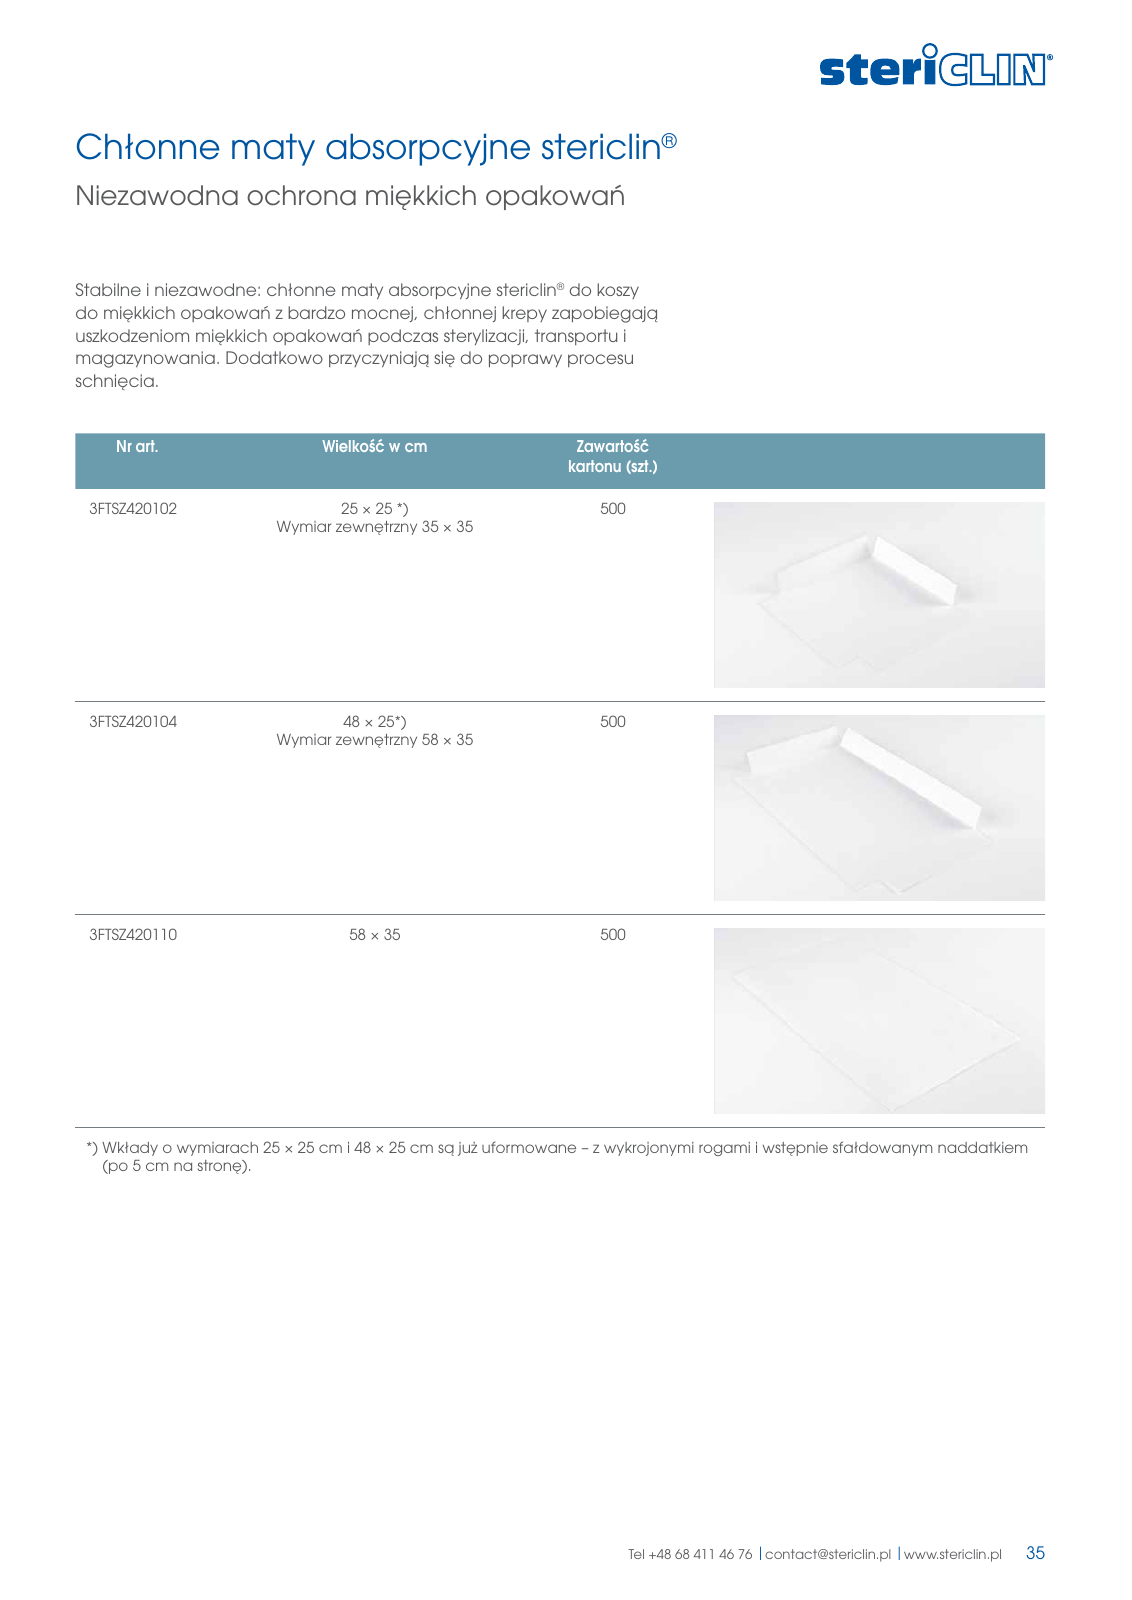 Vorschau stericlin® Produktkatalog 2018/2019 PL Seite 35